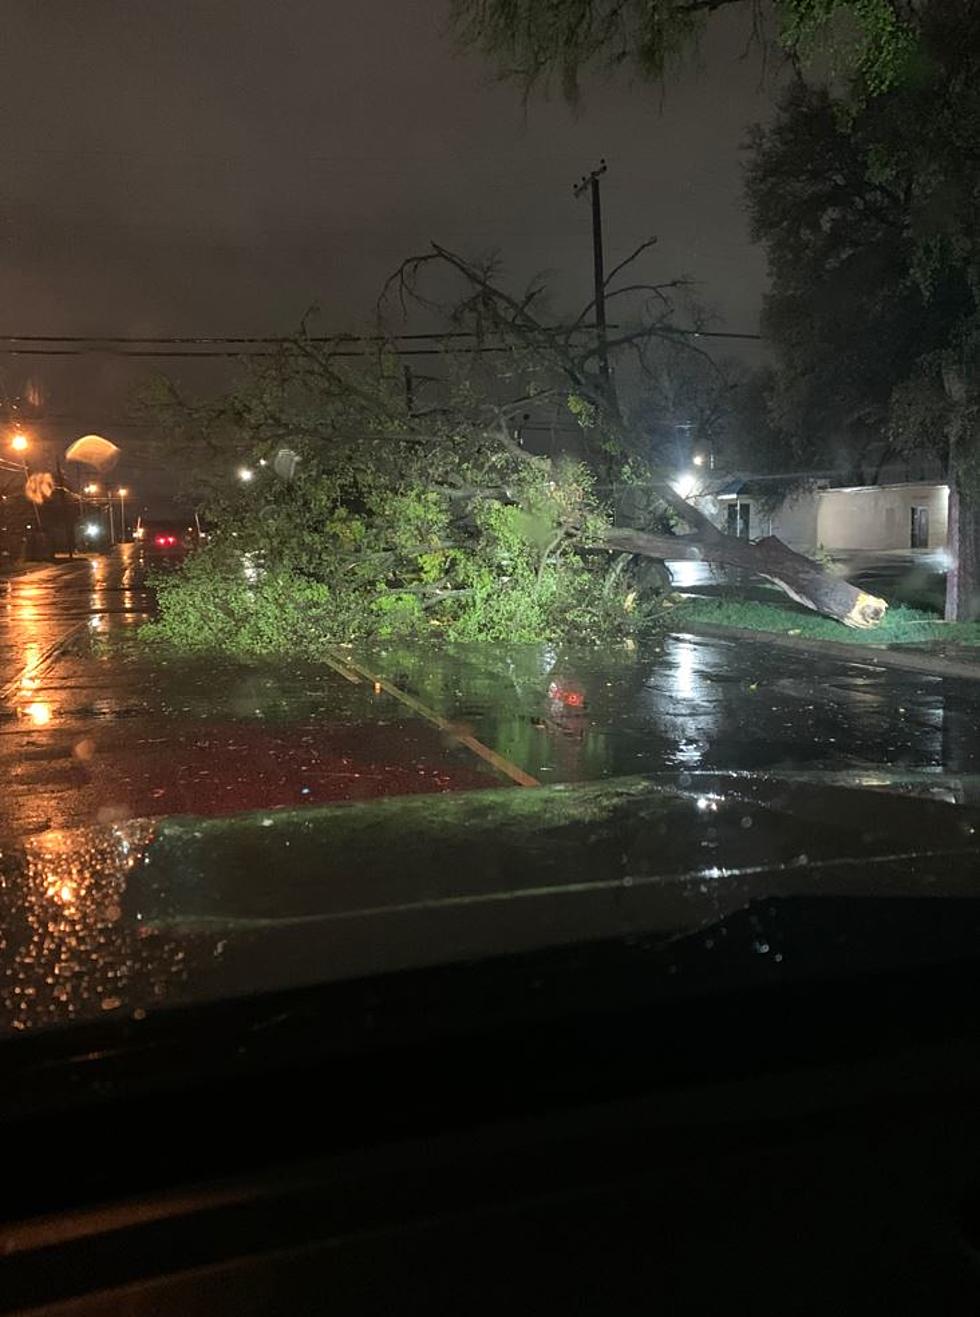 City of Killeen updates community on Thursday’s severe weather